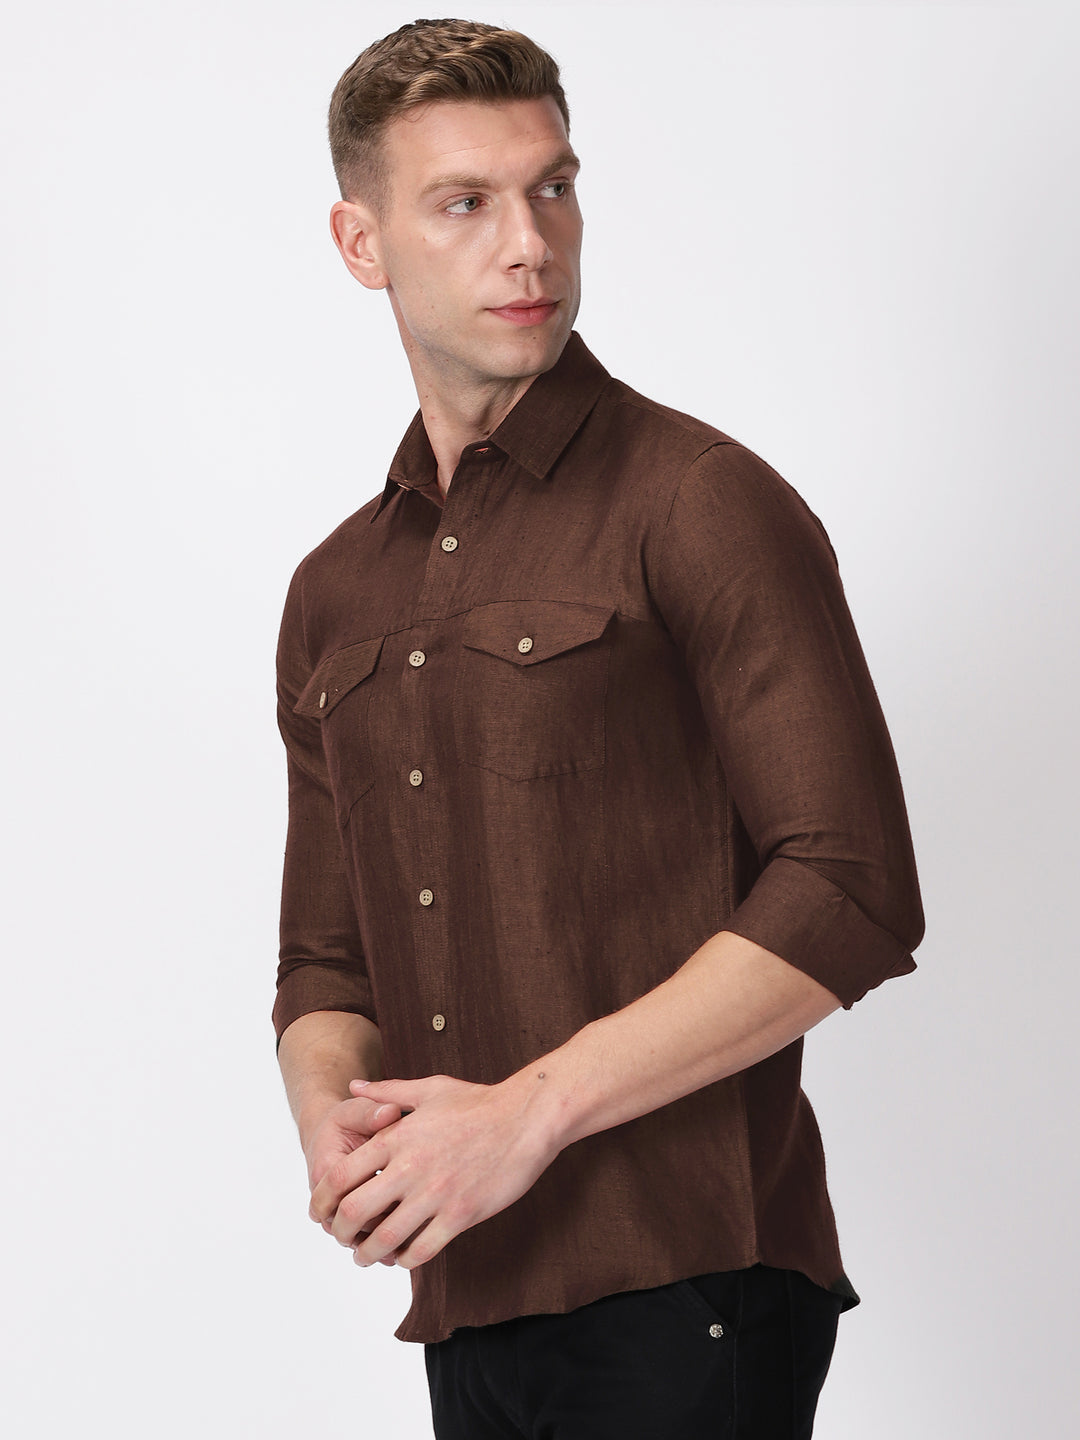 Thomas - Men's Pure Linen Double Pocket Full Sleeve Shirt - Coffee Brown